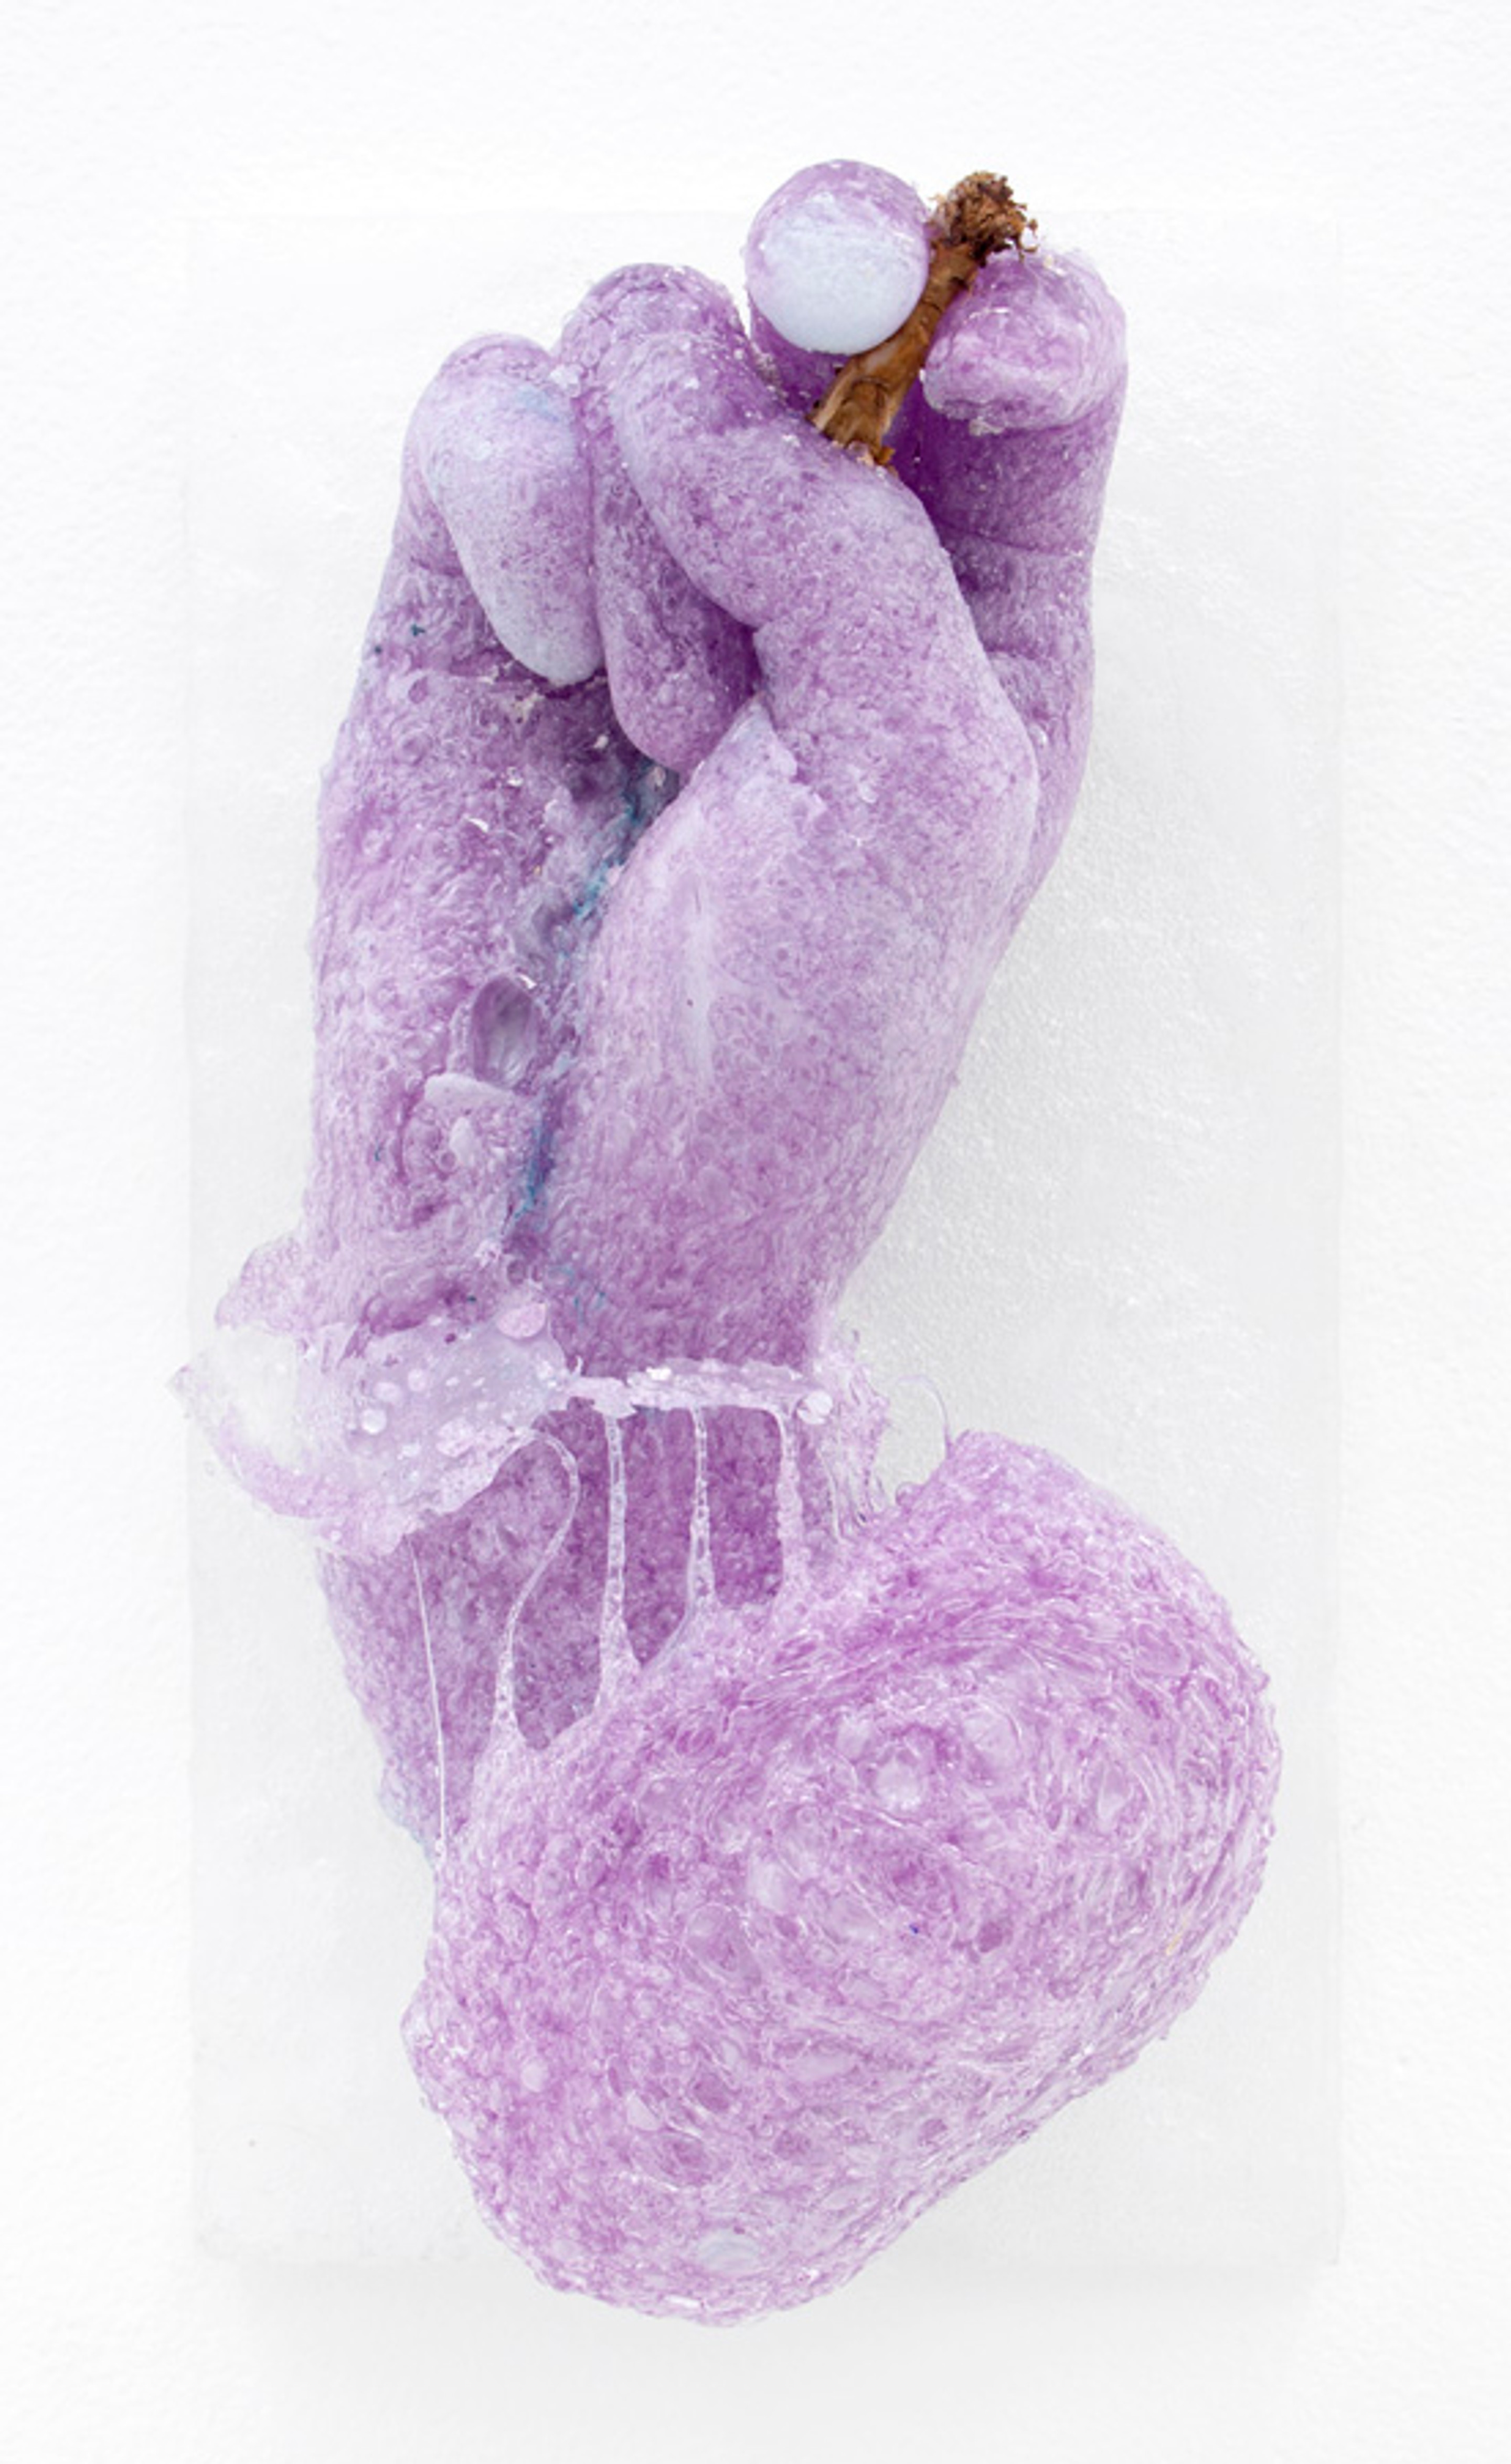 Shroom Cloud Hands (Purple), 2014
Polyurethane, acrylic paint
10.5 x 6 x 3.5 inches